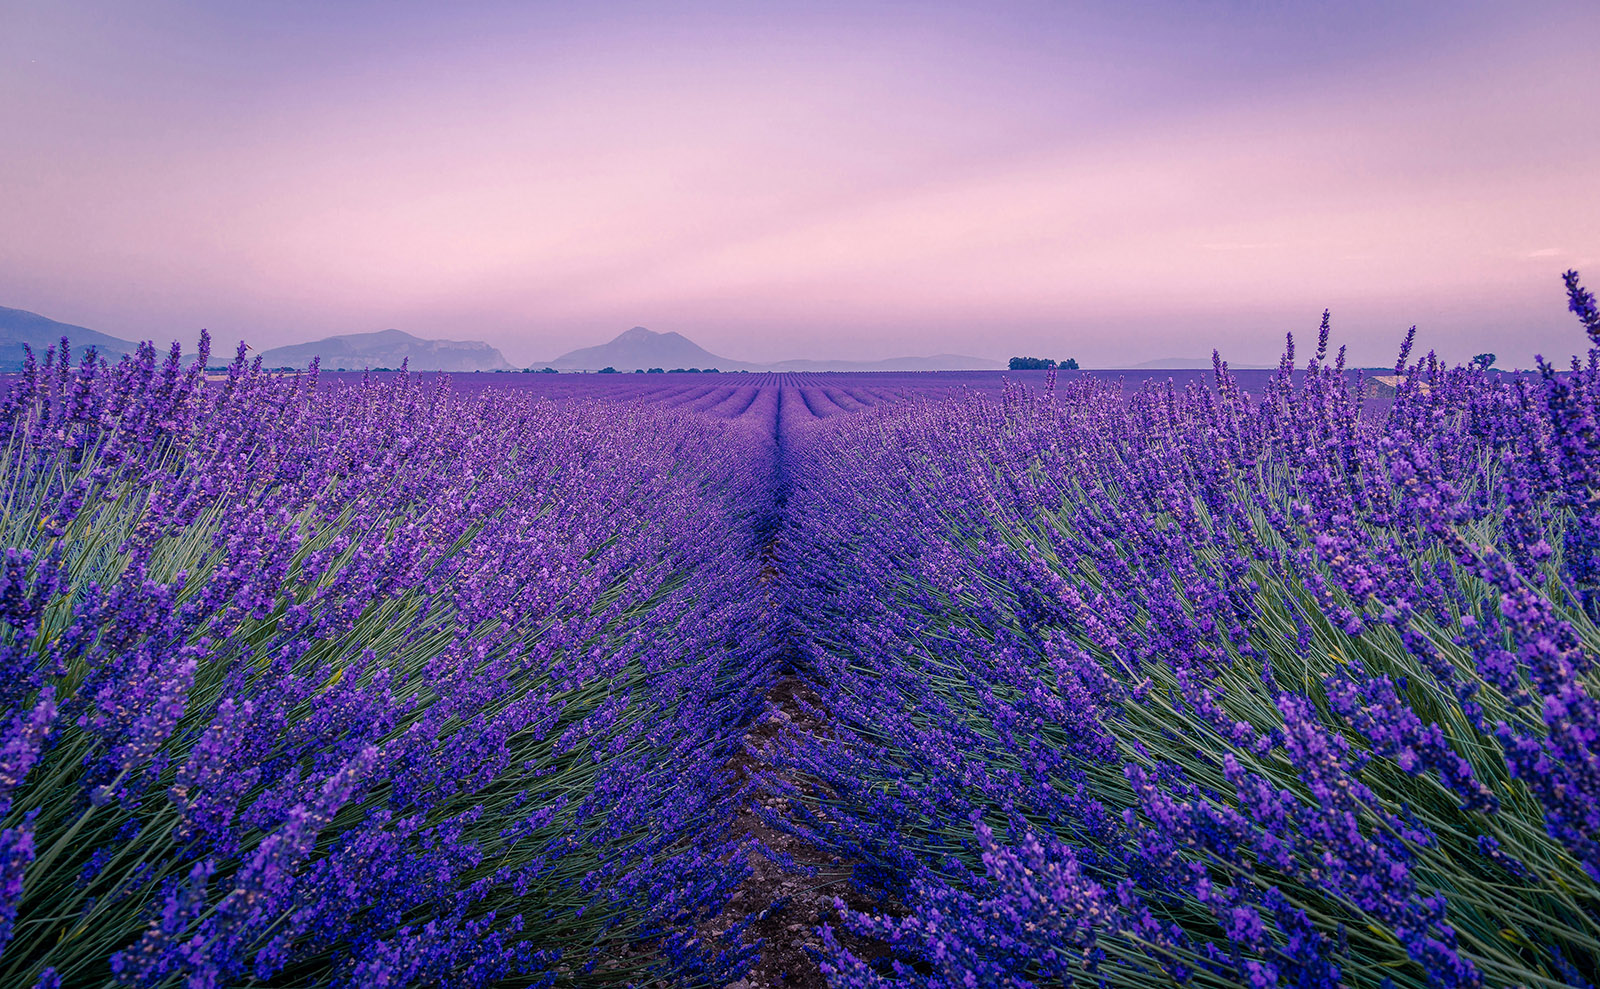 vast field of purple lavender plants under a blue sky